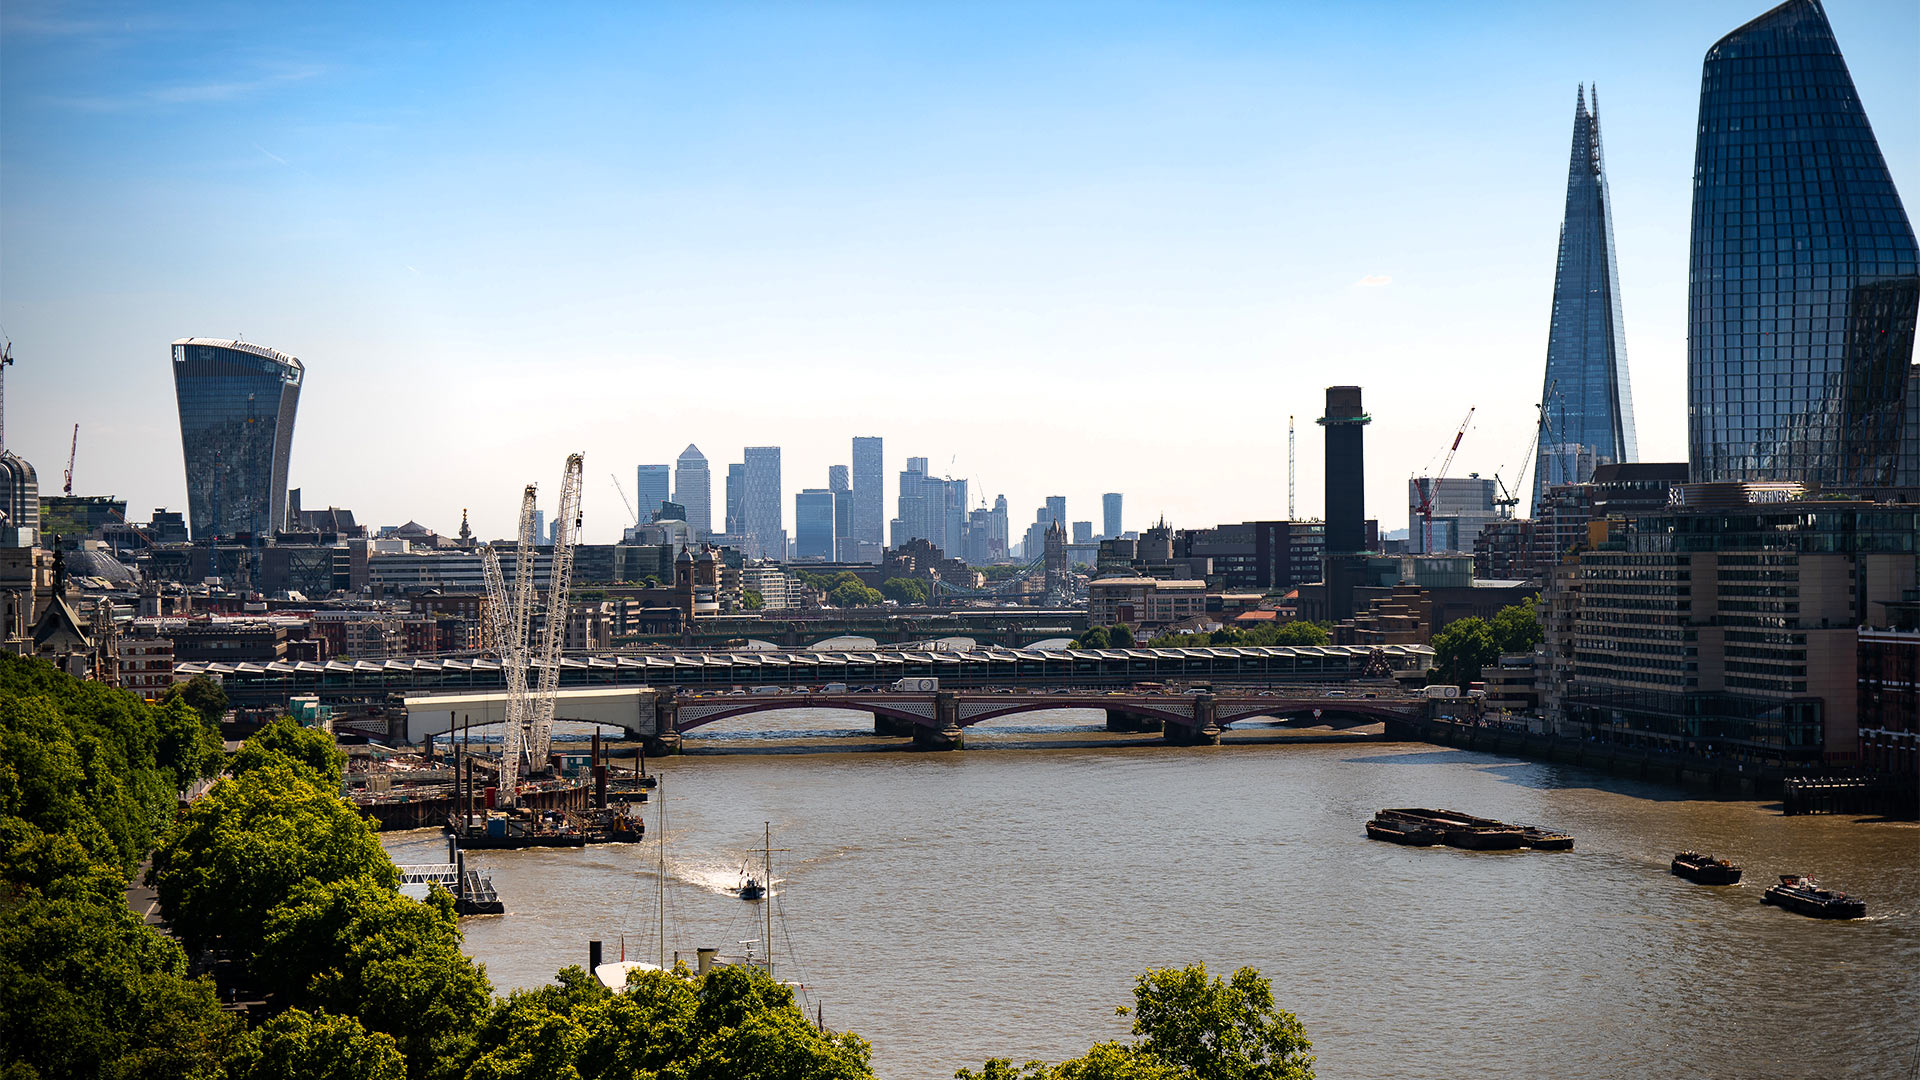 London, Skyline des Finanzzentrums Canary Wharf | picture alliance / empics